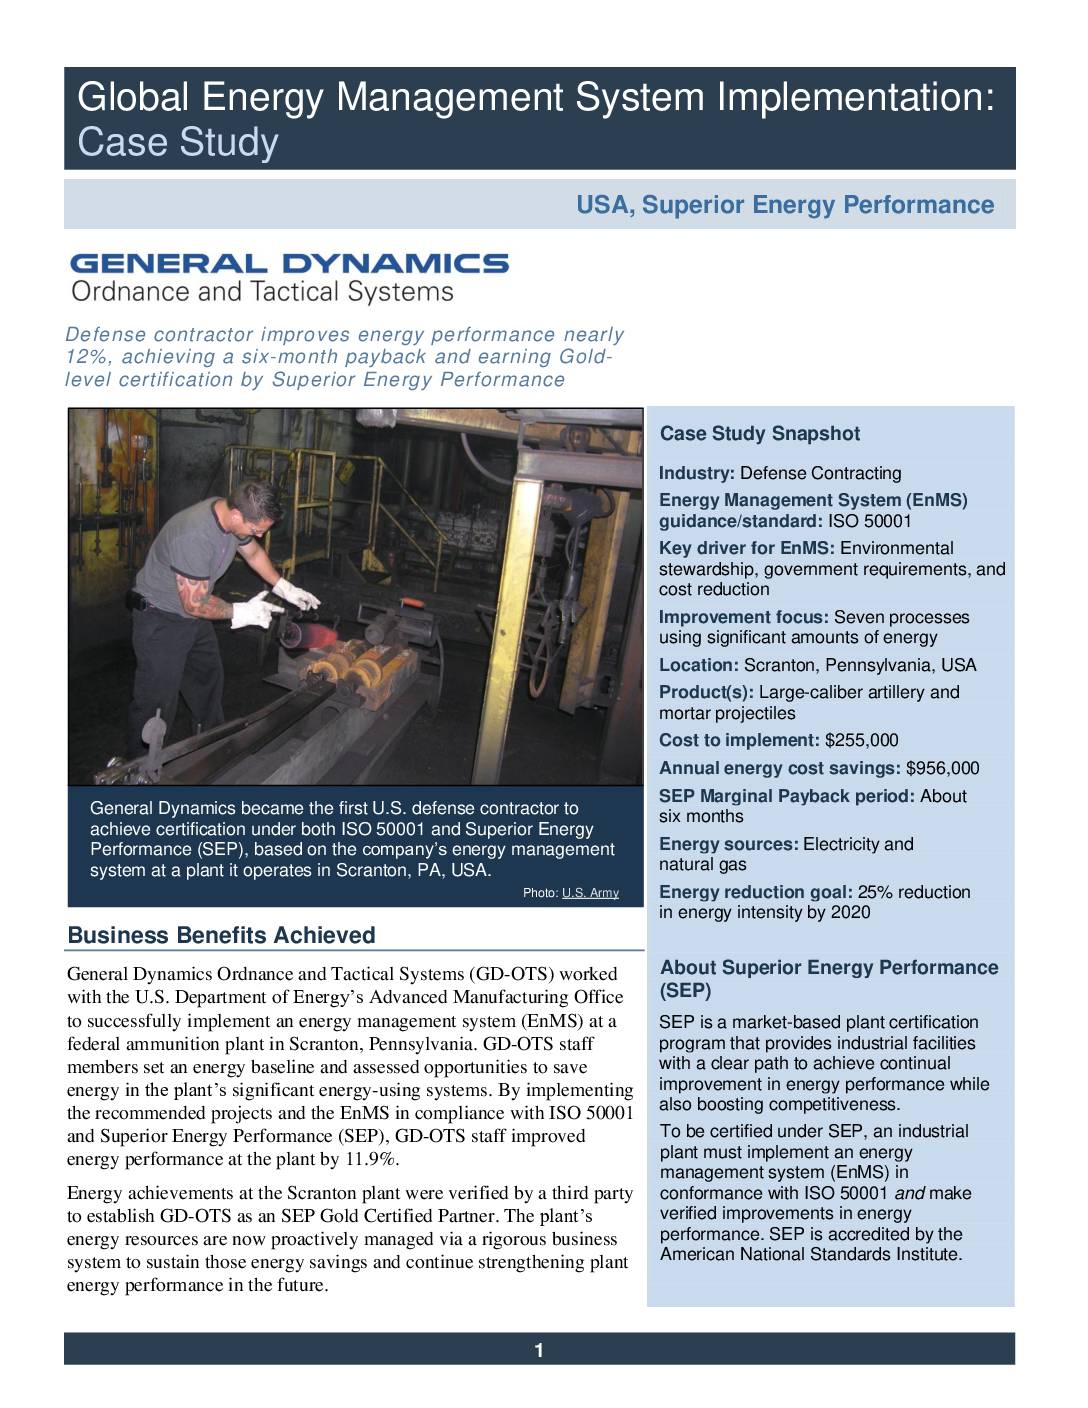 Global Energy Management System Implementation: General Dynamics Case Study